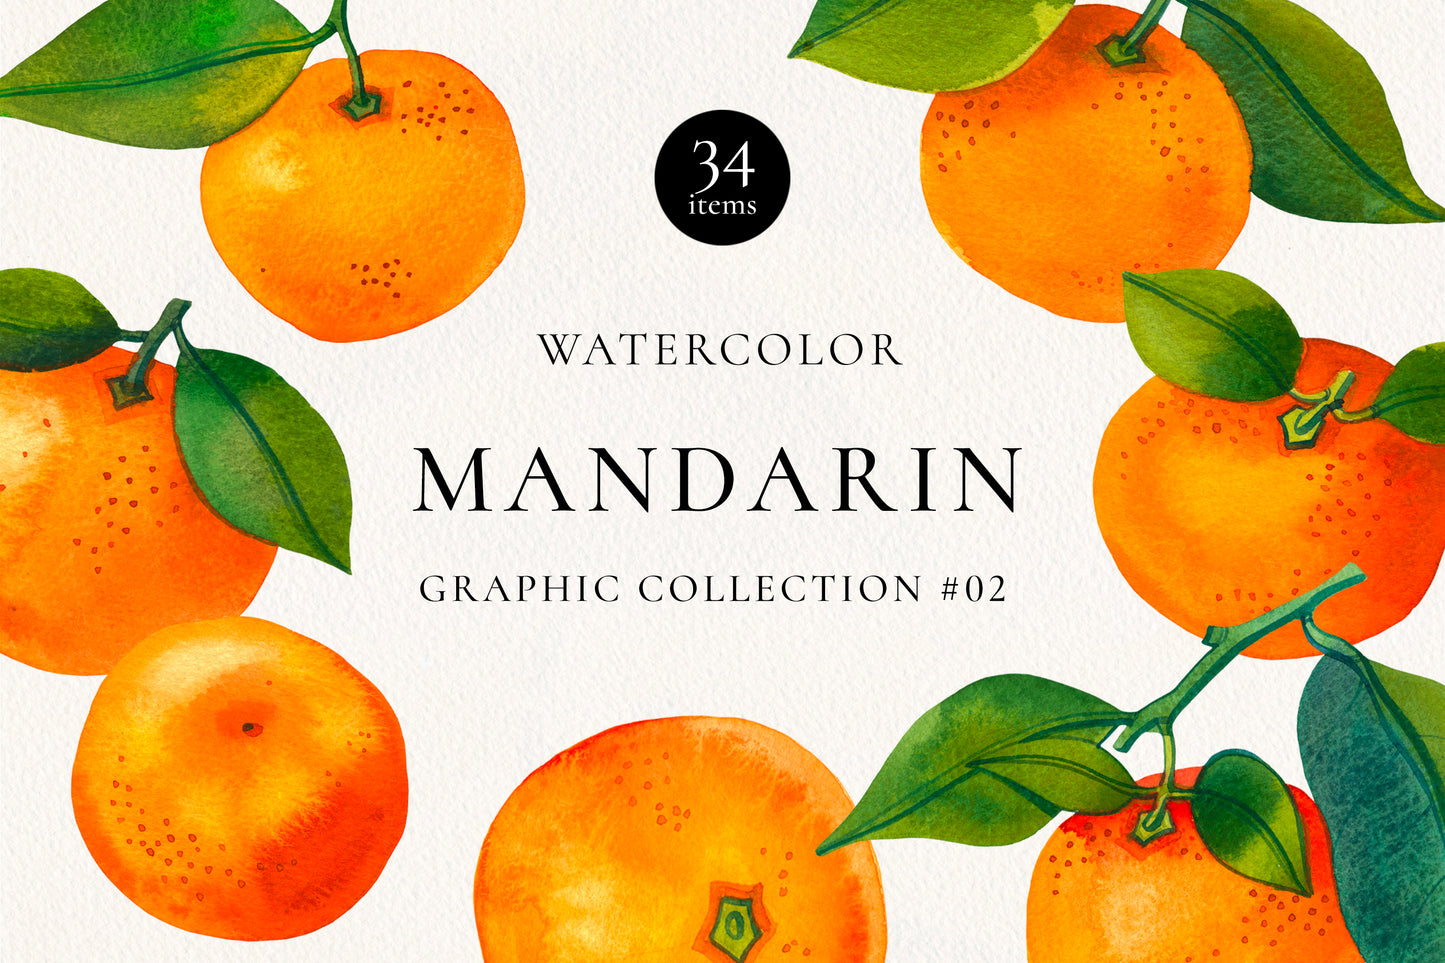 WATERCOLOR MANDARIN Graphic Collection #02